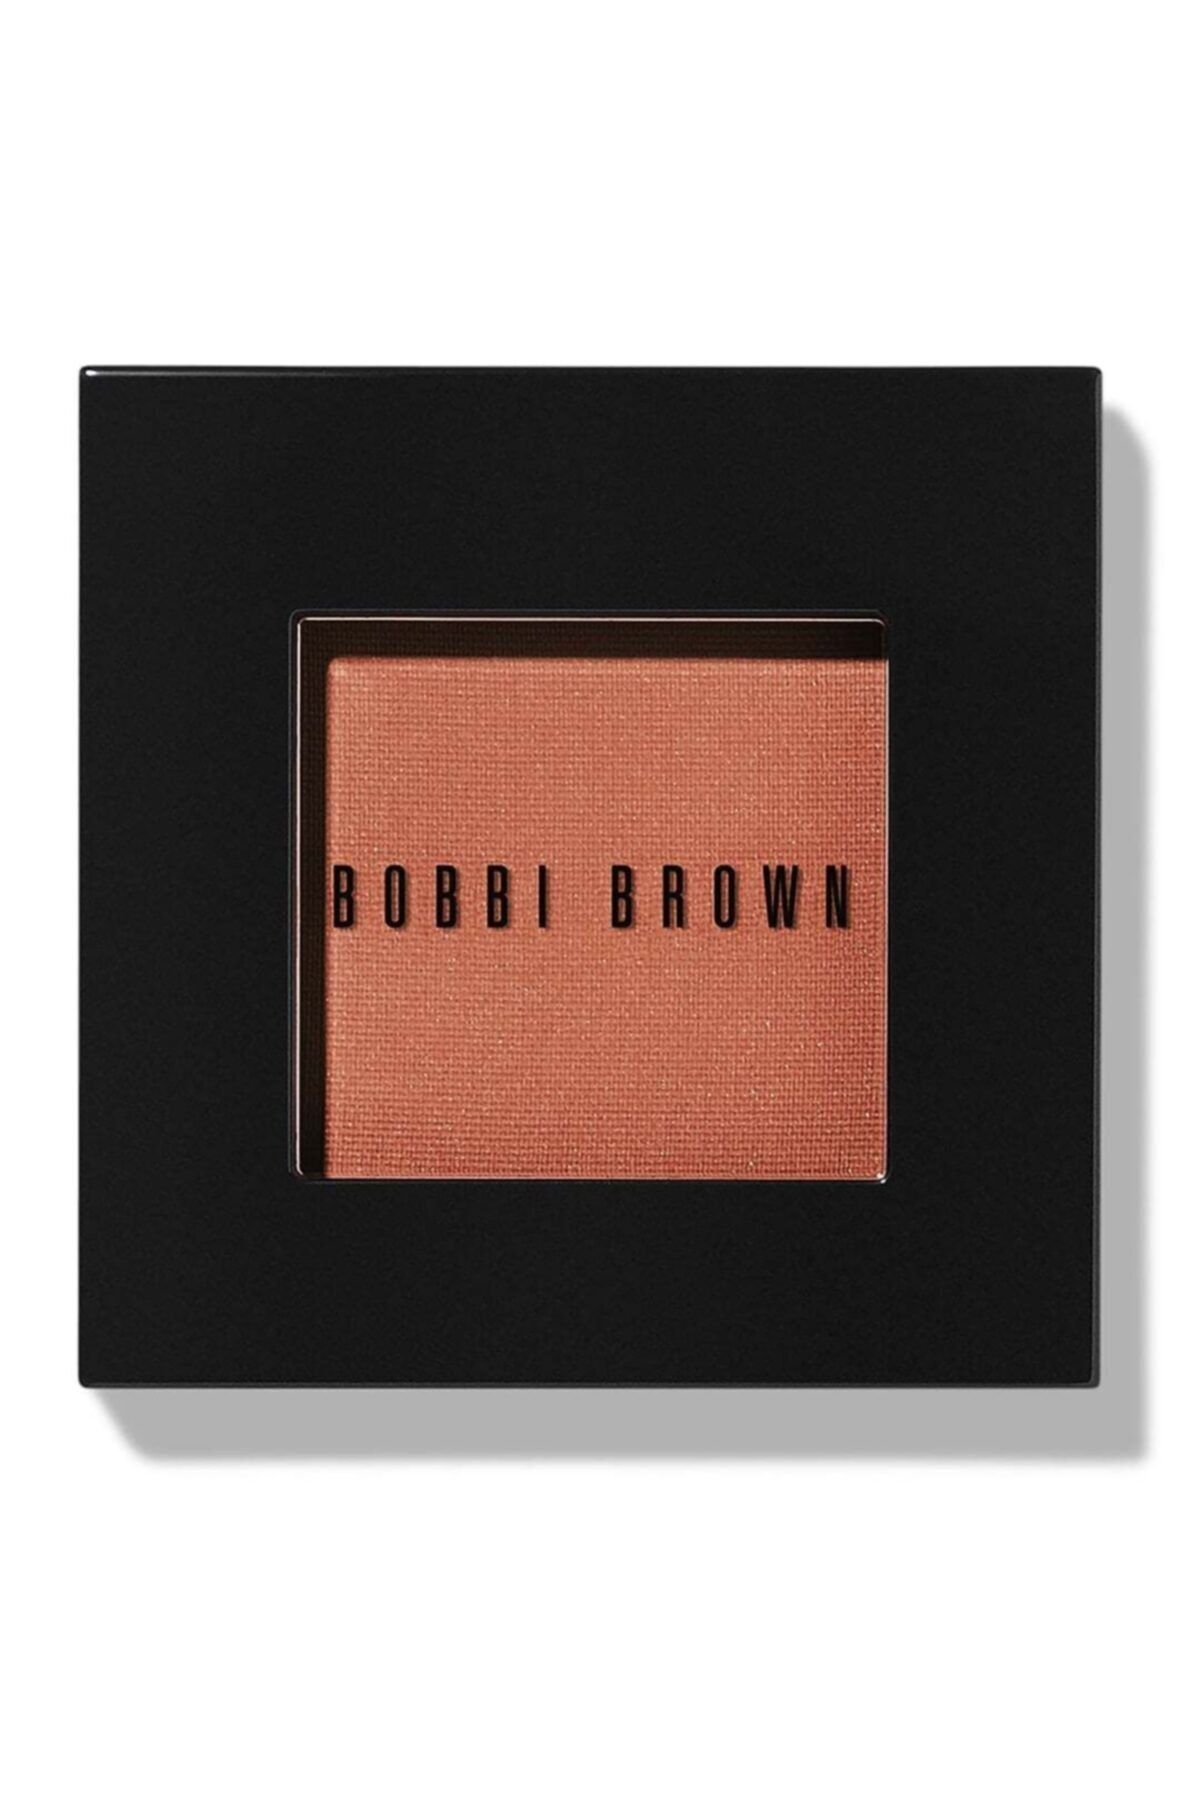 Bobbi Brown Blush / Allık .13 Oz. / 3.7g New Clementine 716170144818